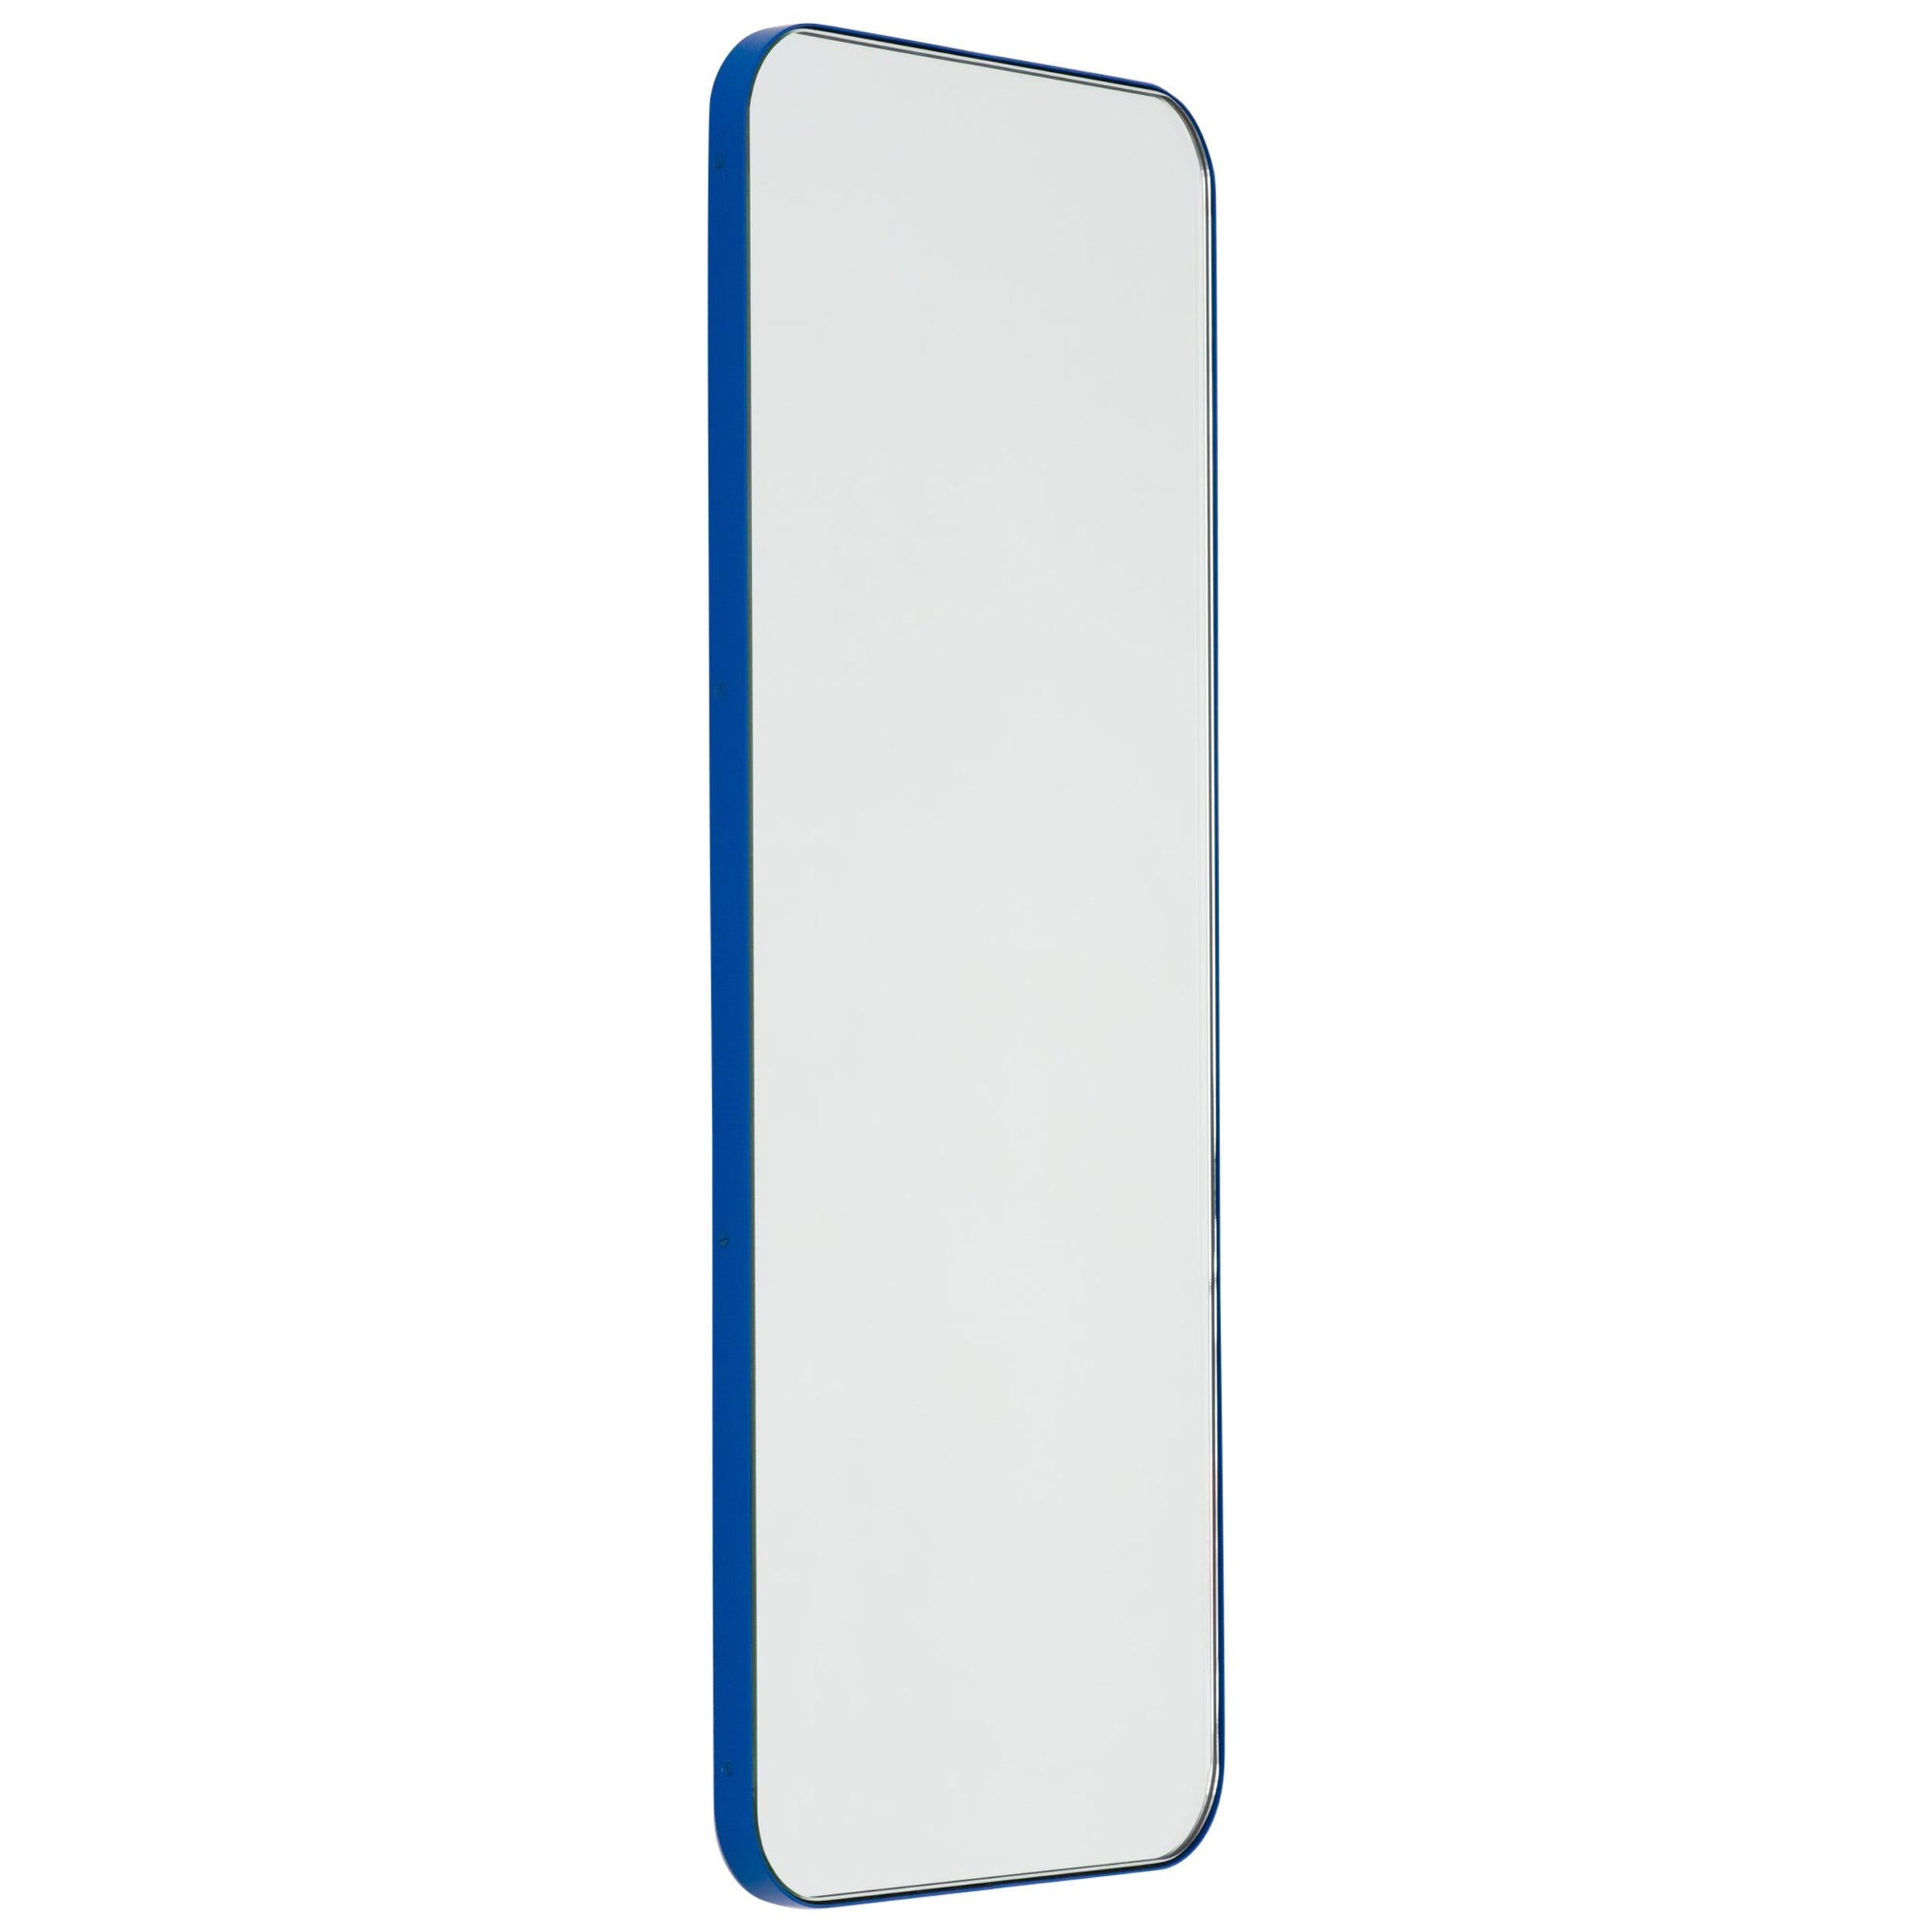 Quadris Rectangular Modern Mirror with a Blue Frame, Medium For Sale